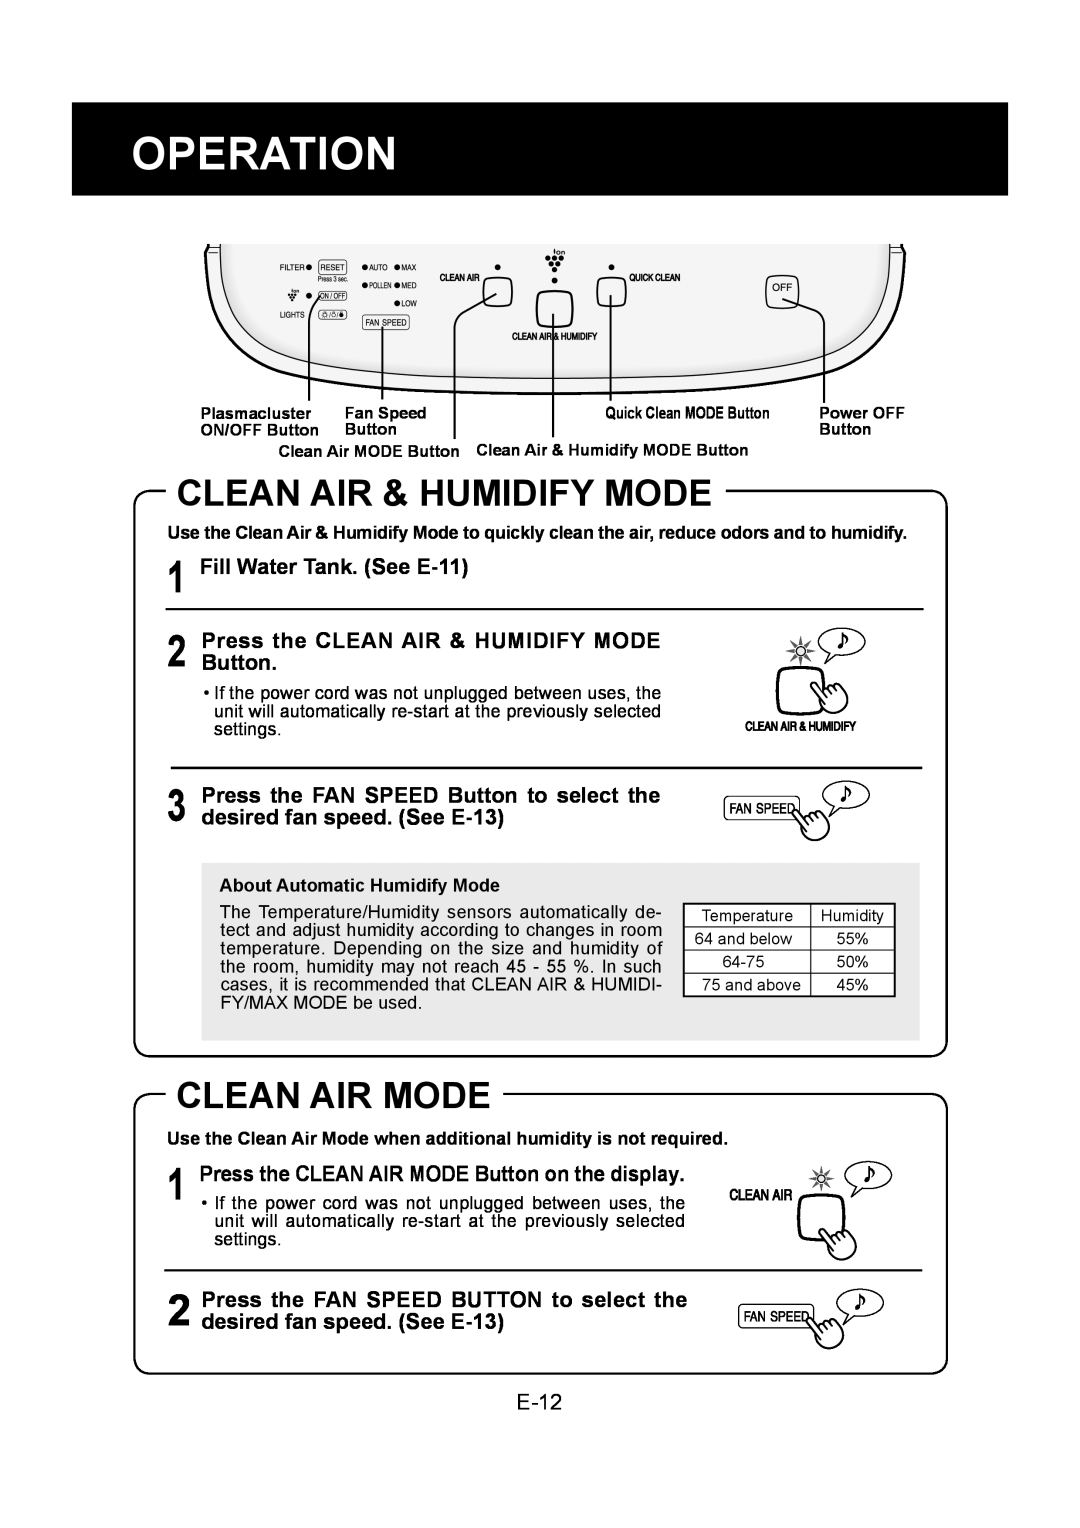 Sharp KC-860U operation manual Operation, Clean Air & Humidify Mode, Clean Air Mode, Fill Water Tank. See E-11, E-12 